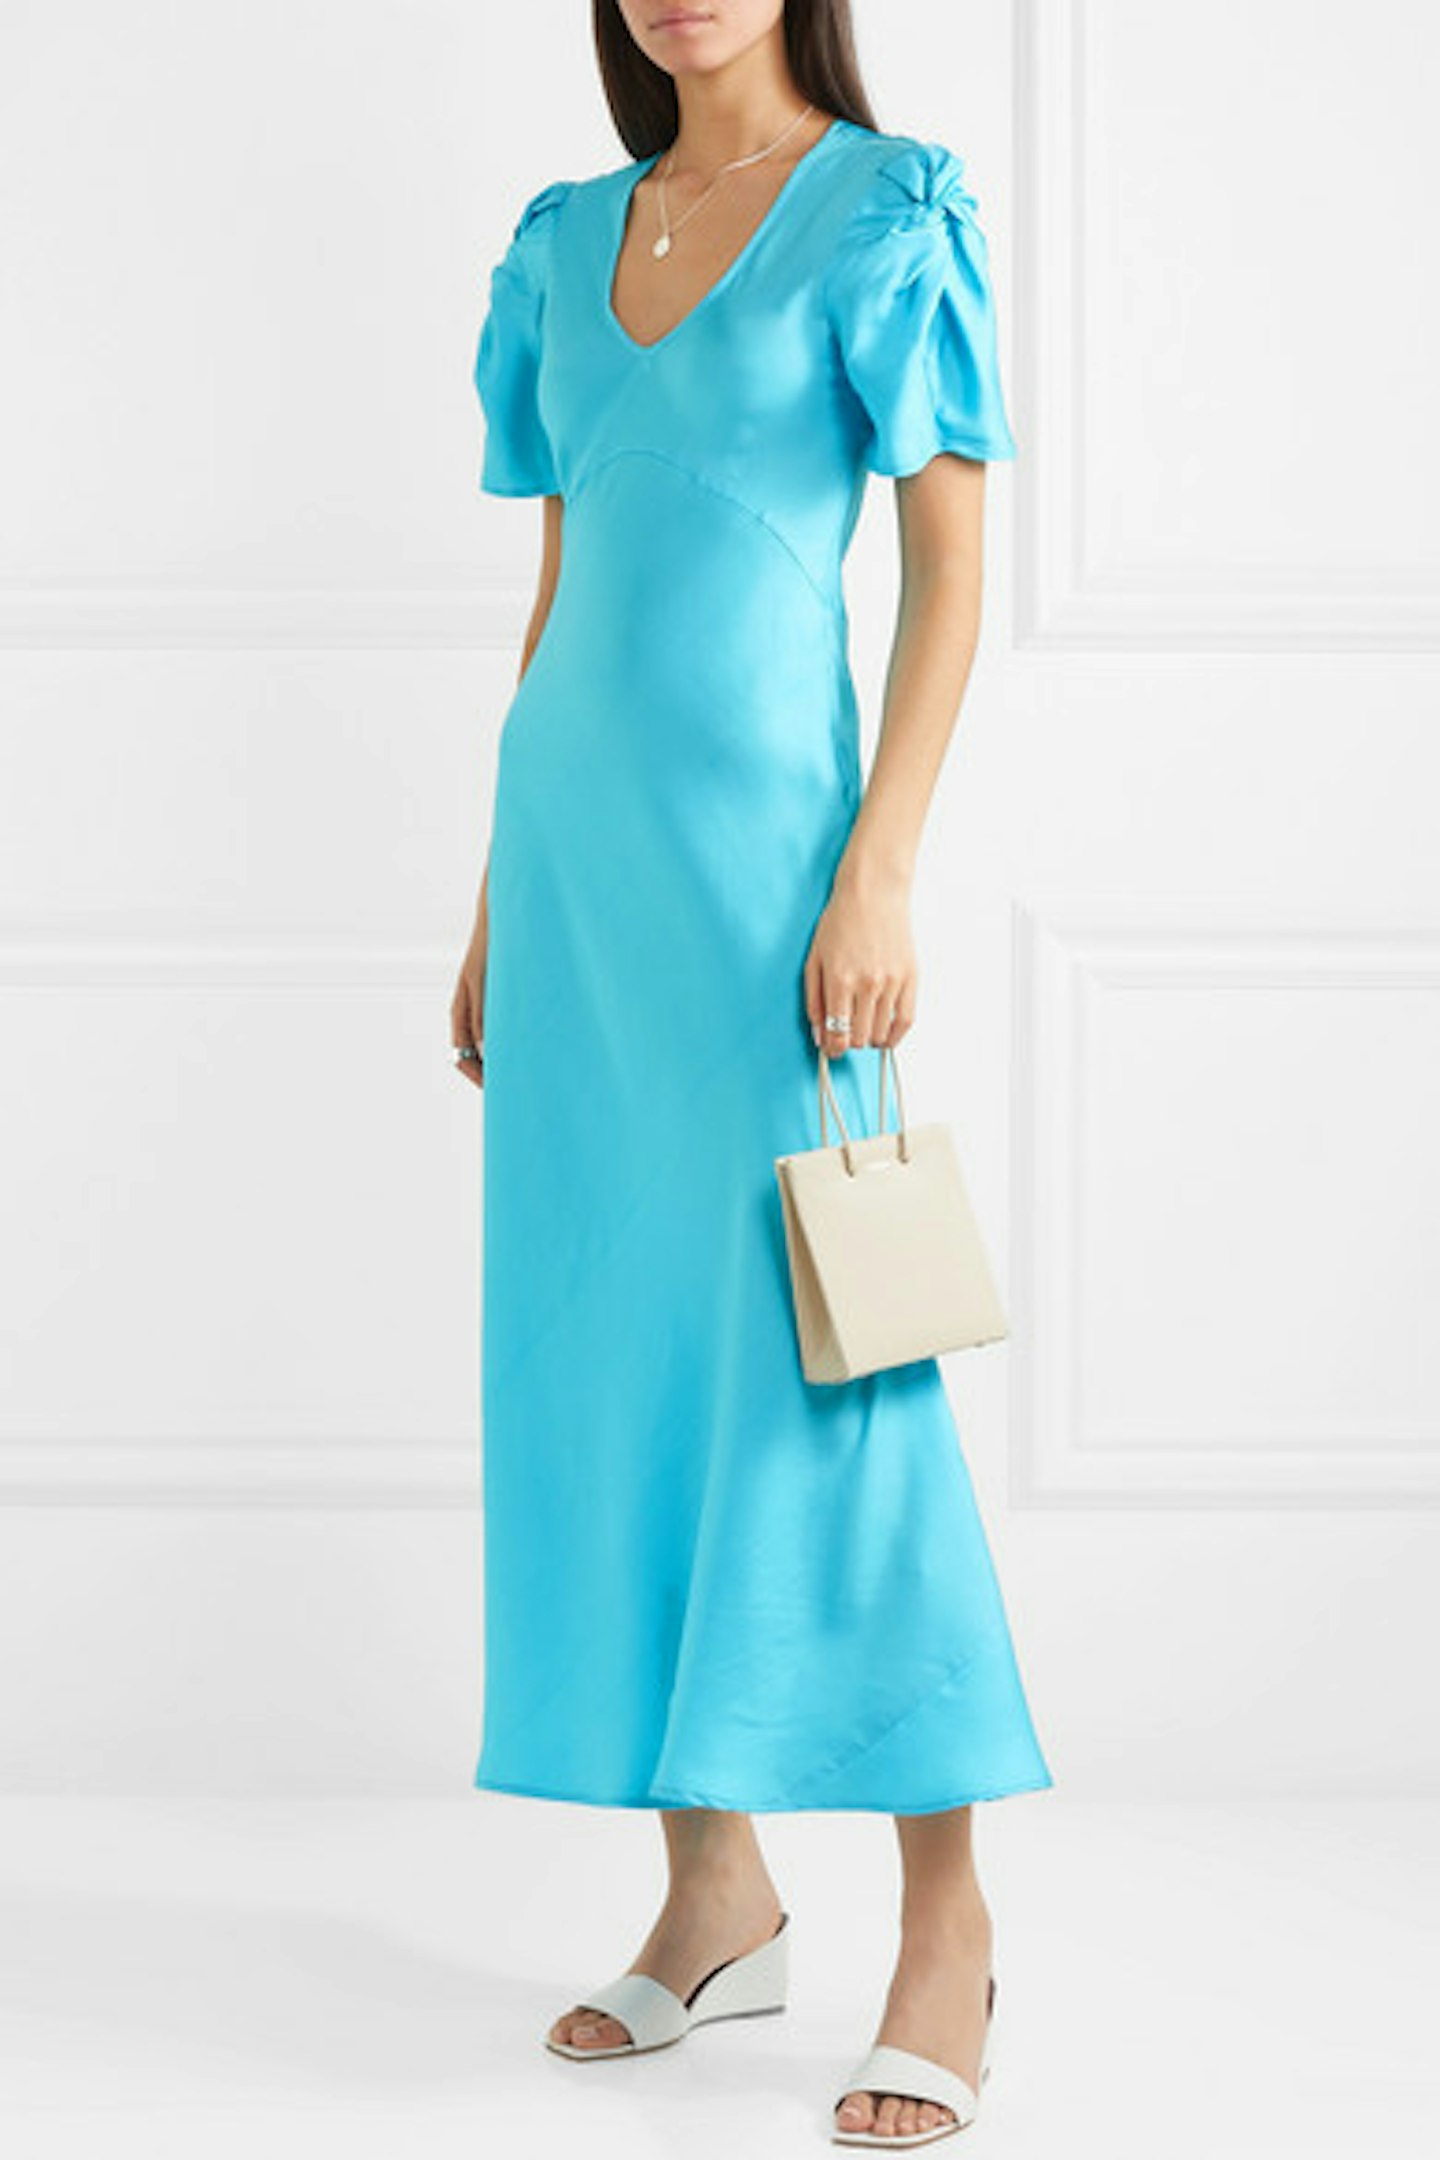 Maggie Marilyn + Net Sustain, Knotted Silk-Twill Midi Dress, £440